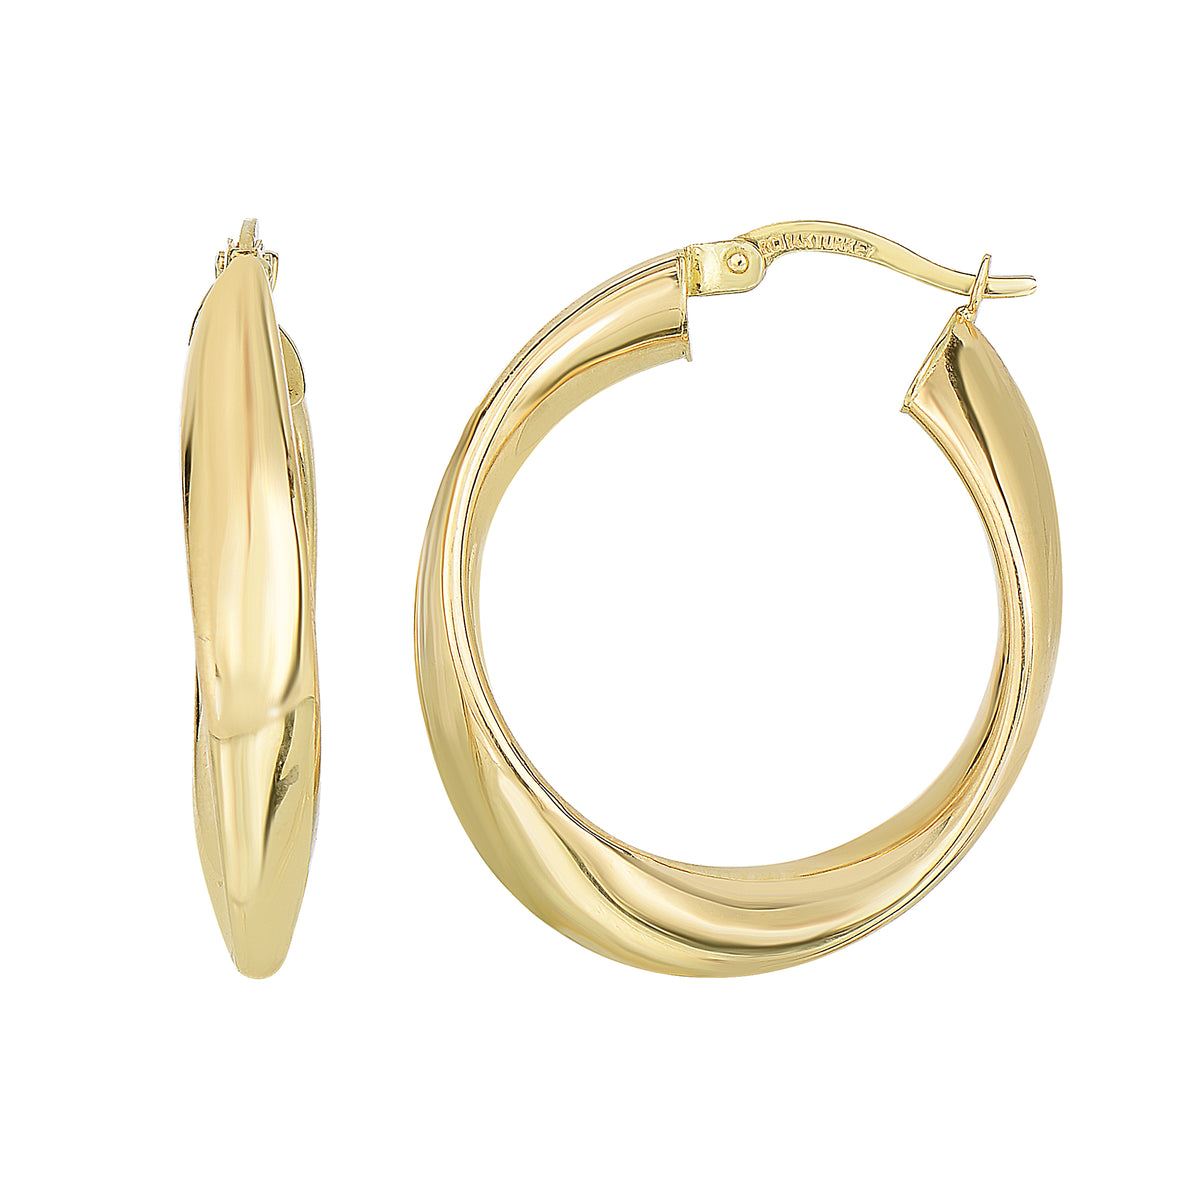 14K Yellow Gold Shiny Twisted Oval Hoop Earrings, Diameter 21mm